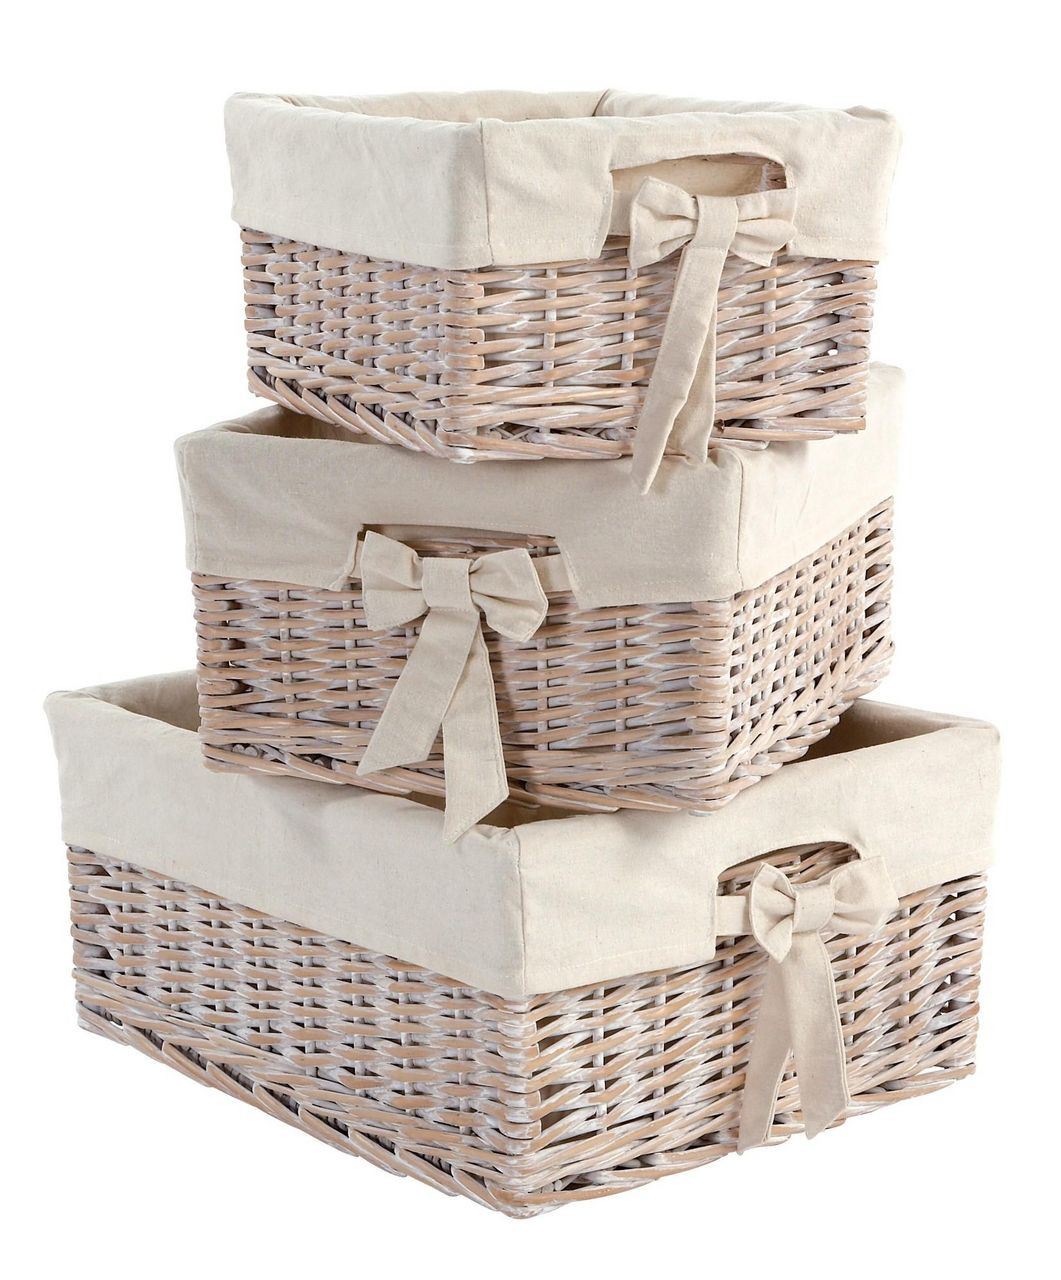 Best ideas about Baby Storage Baskets
. Save or Pin Storage Baskets Set of 3 in White Wash Nursery Now.